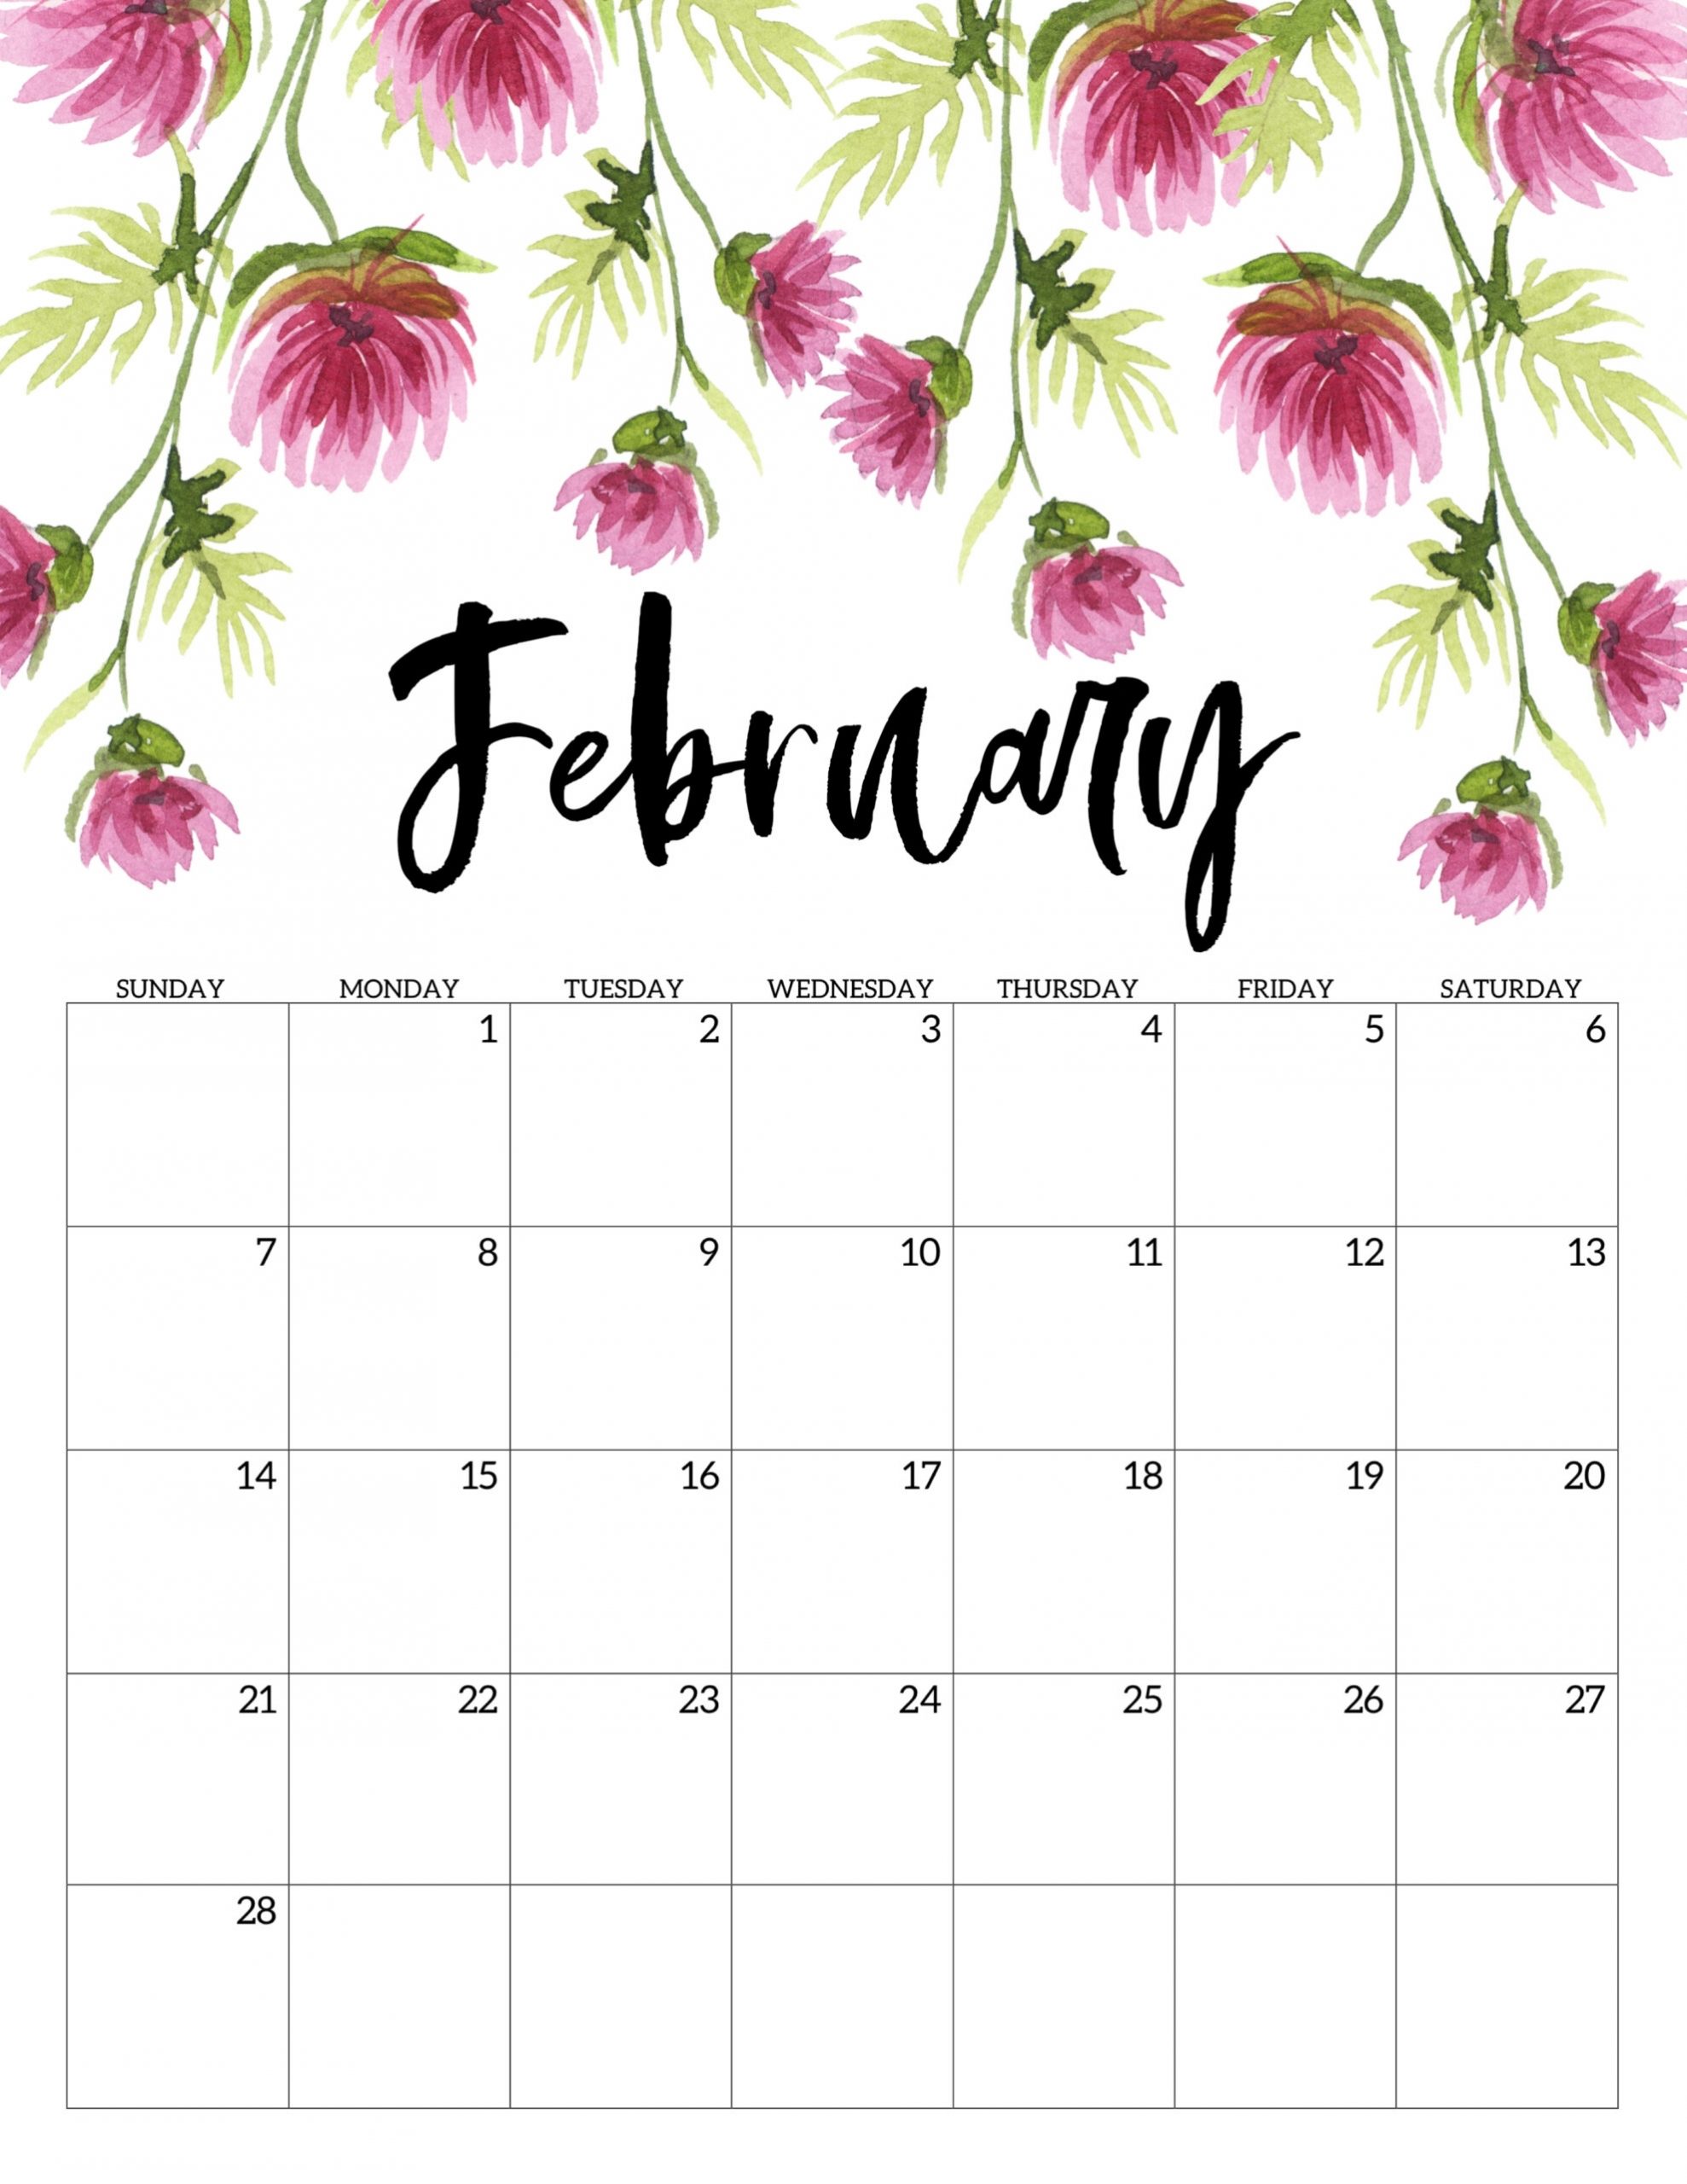 Catch Free Printable Floral Calendar 2021